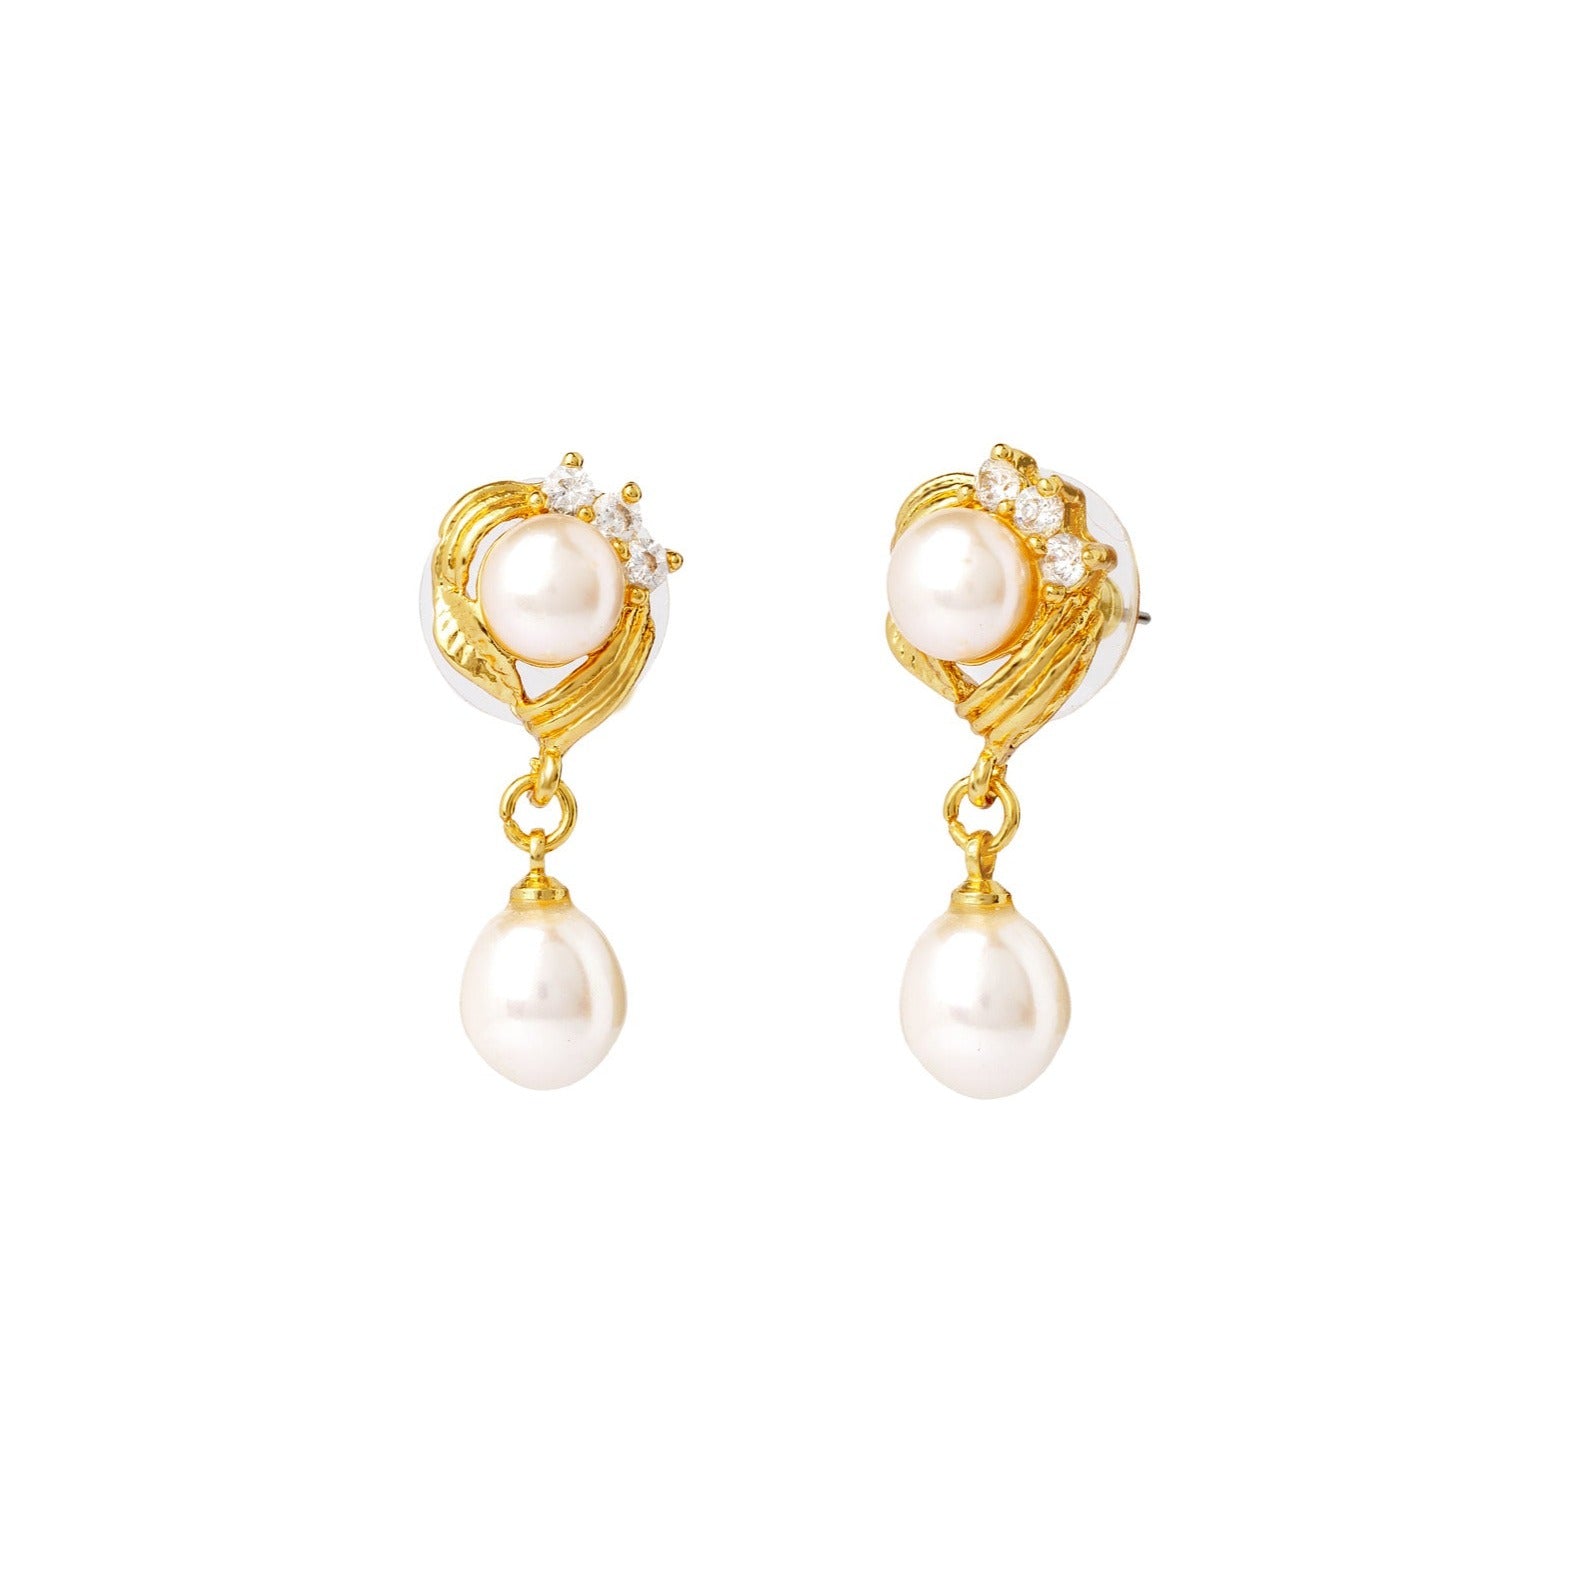 Celestial Drops White Pearl Earrings